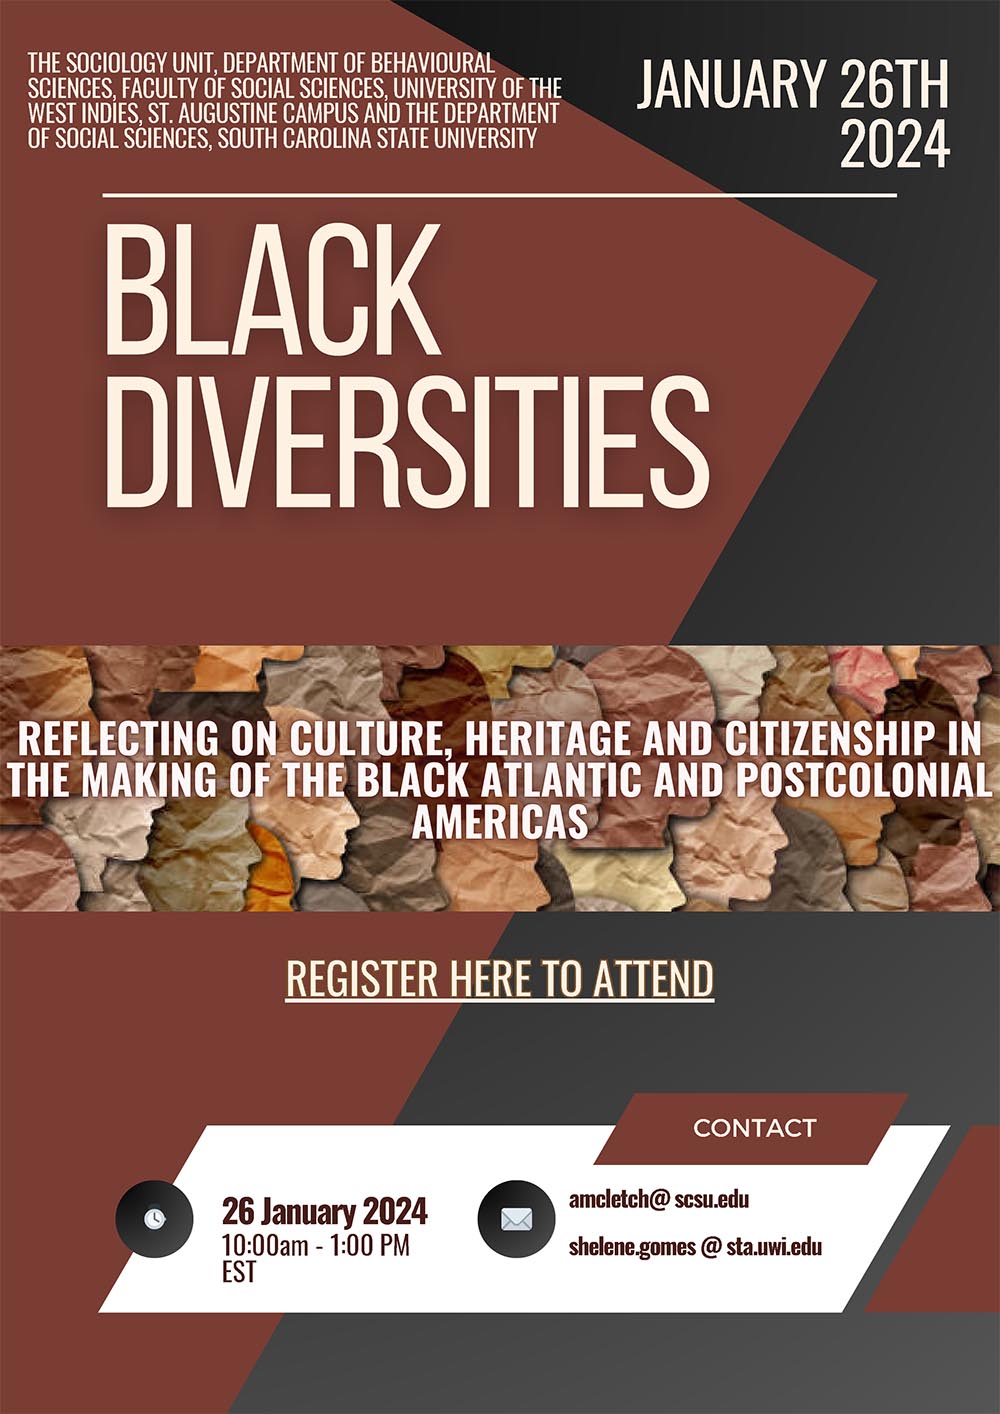 Black Diversities webinar